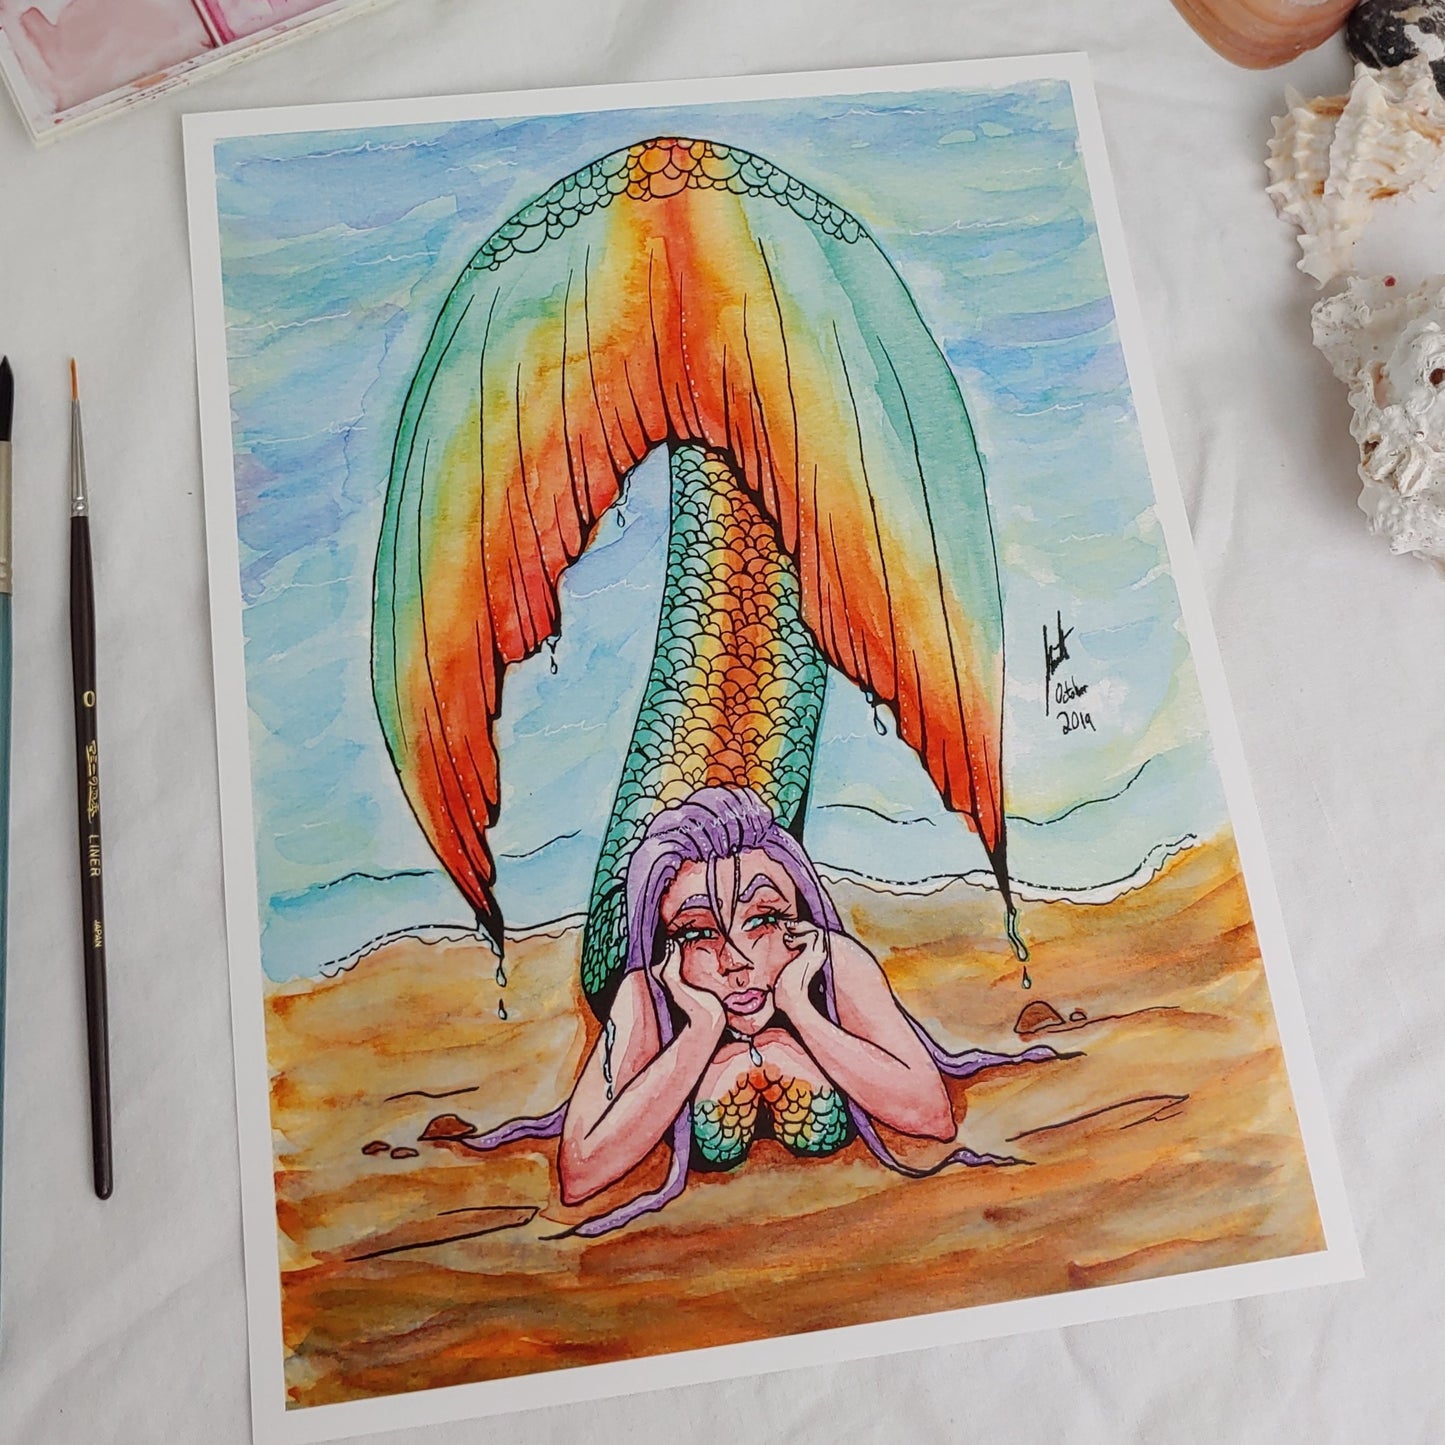 PRINT 8.5x11 - Orange and Teal Tailed Mermaid